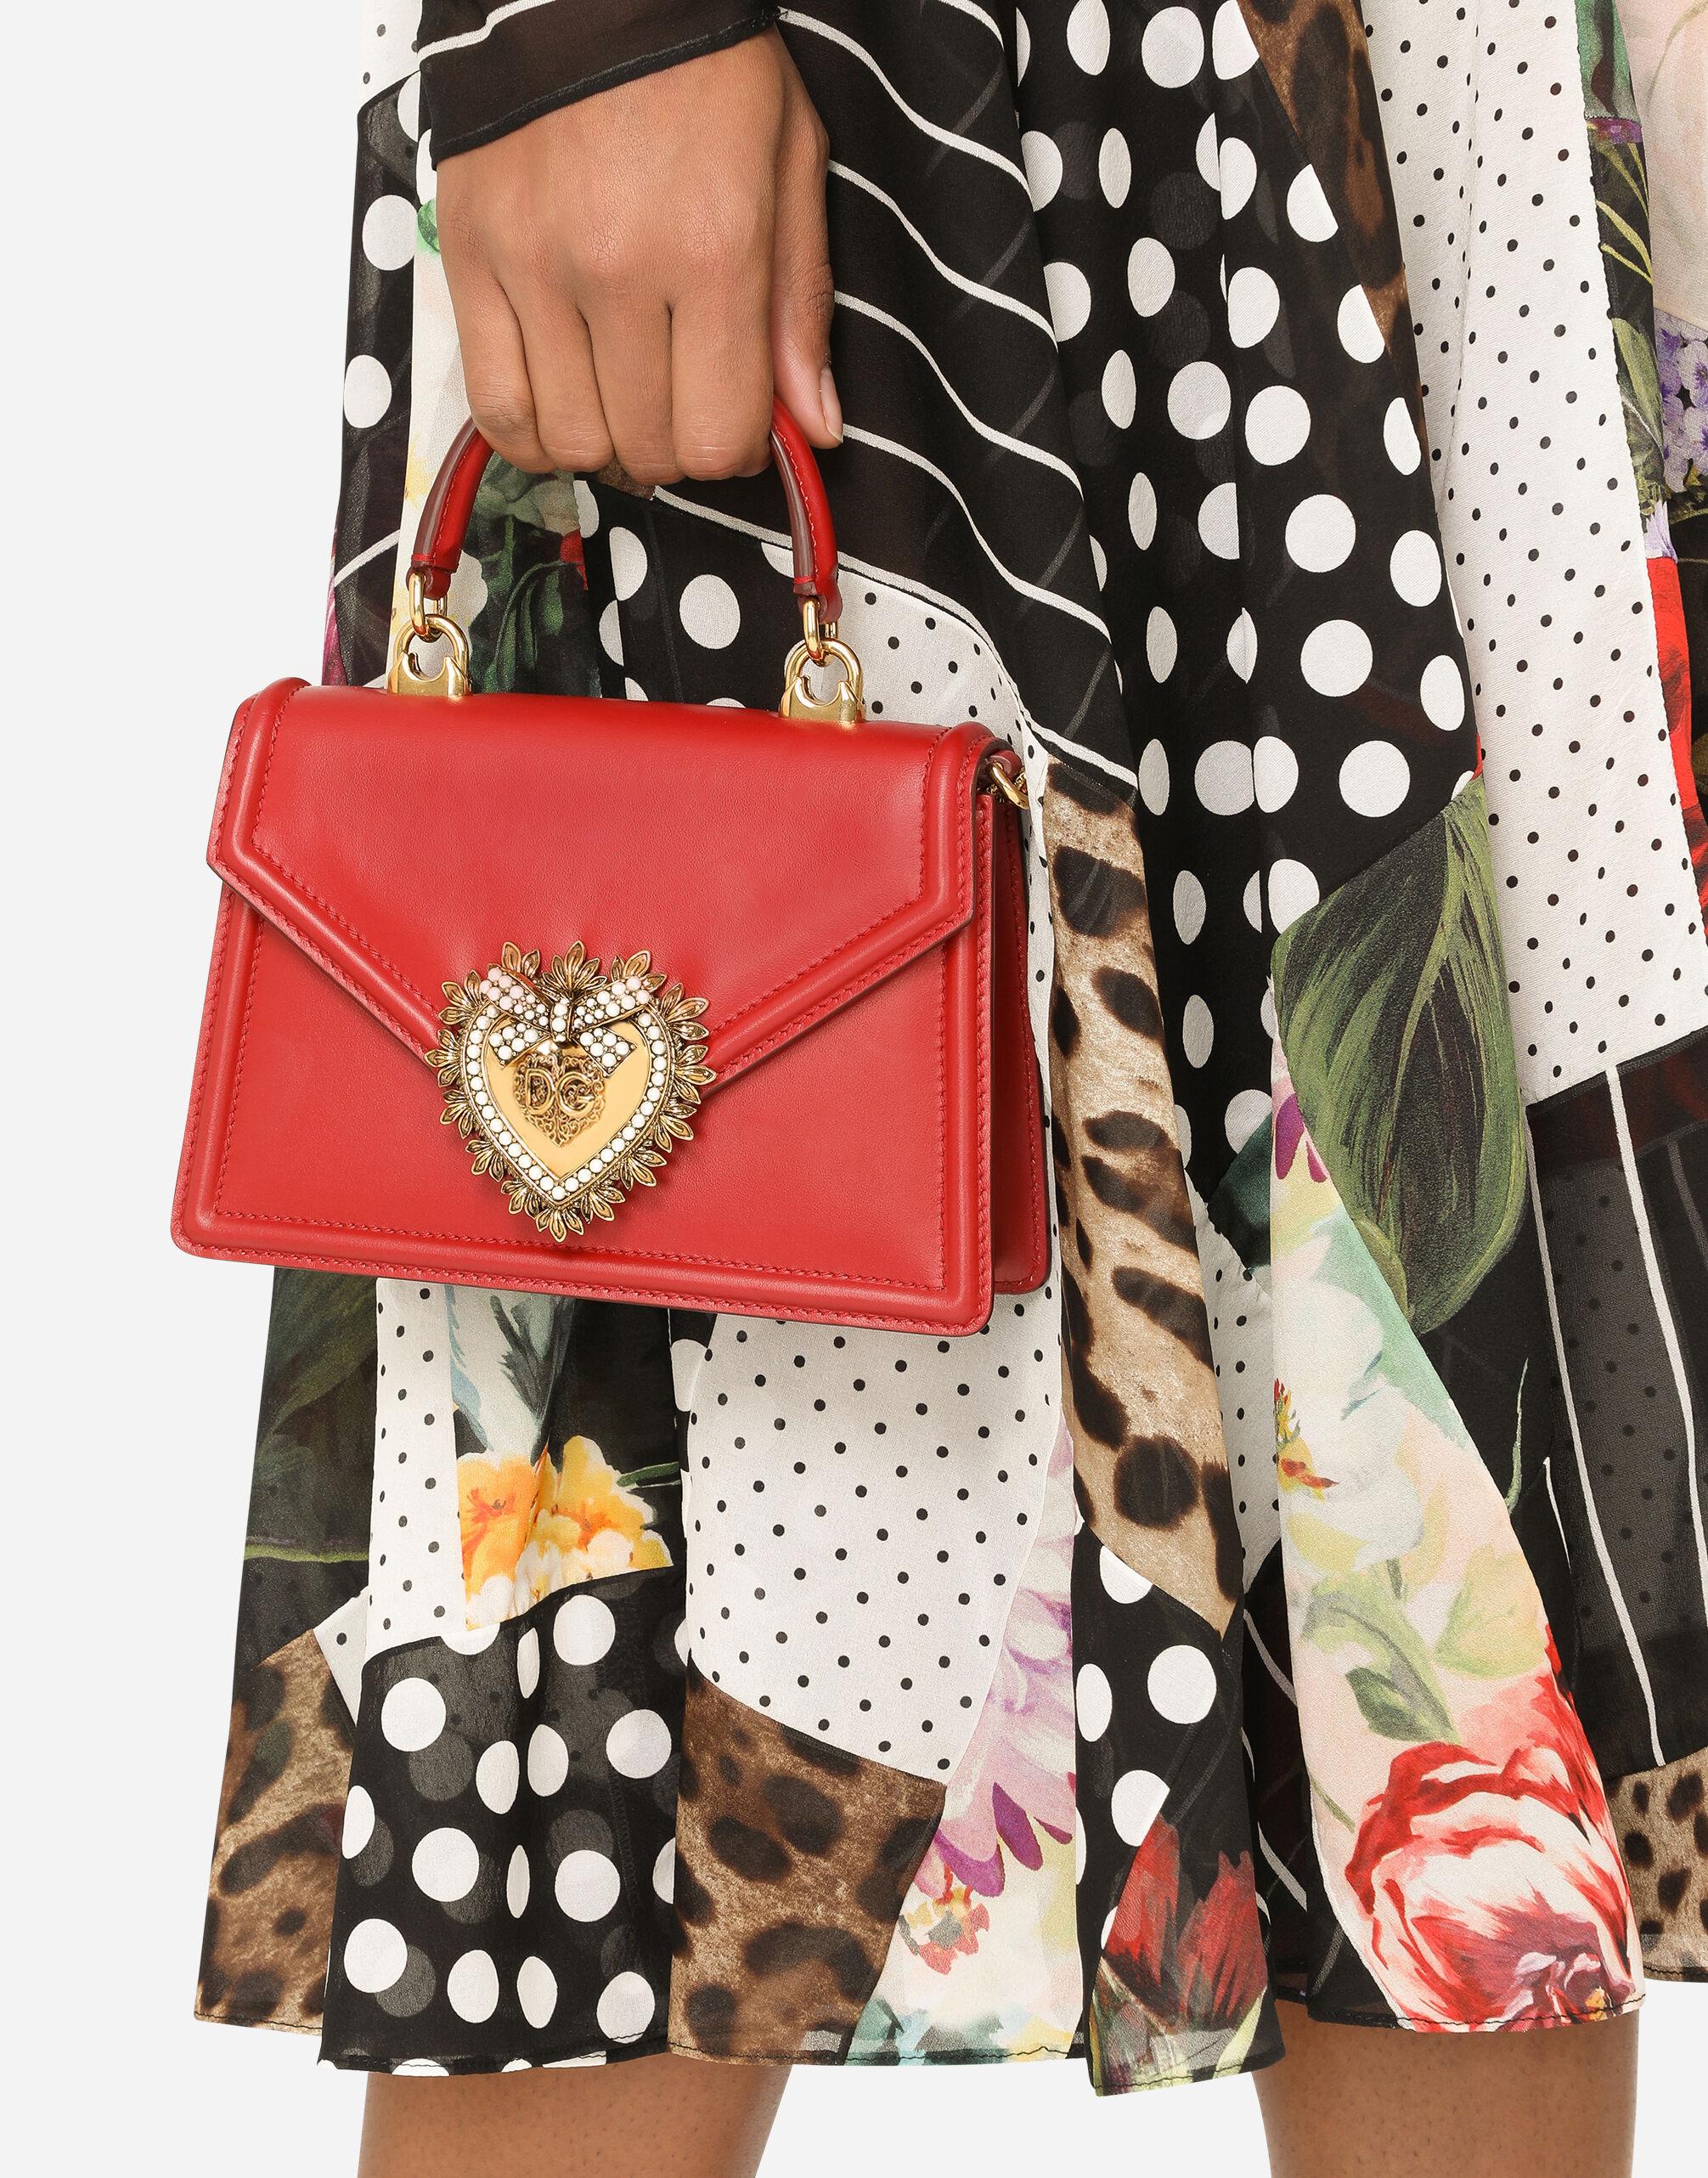 Dolce & Gabbana Leather Medium Devotion Bag in Red - Save 21 